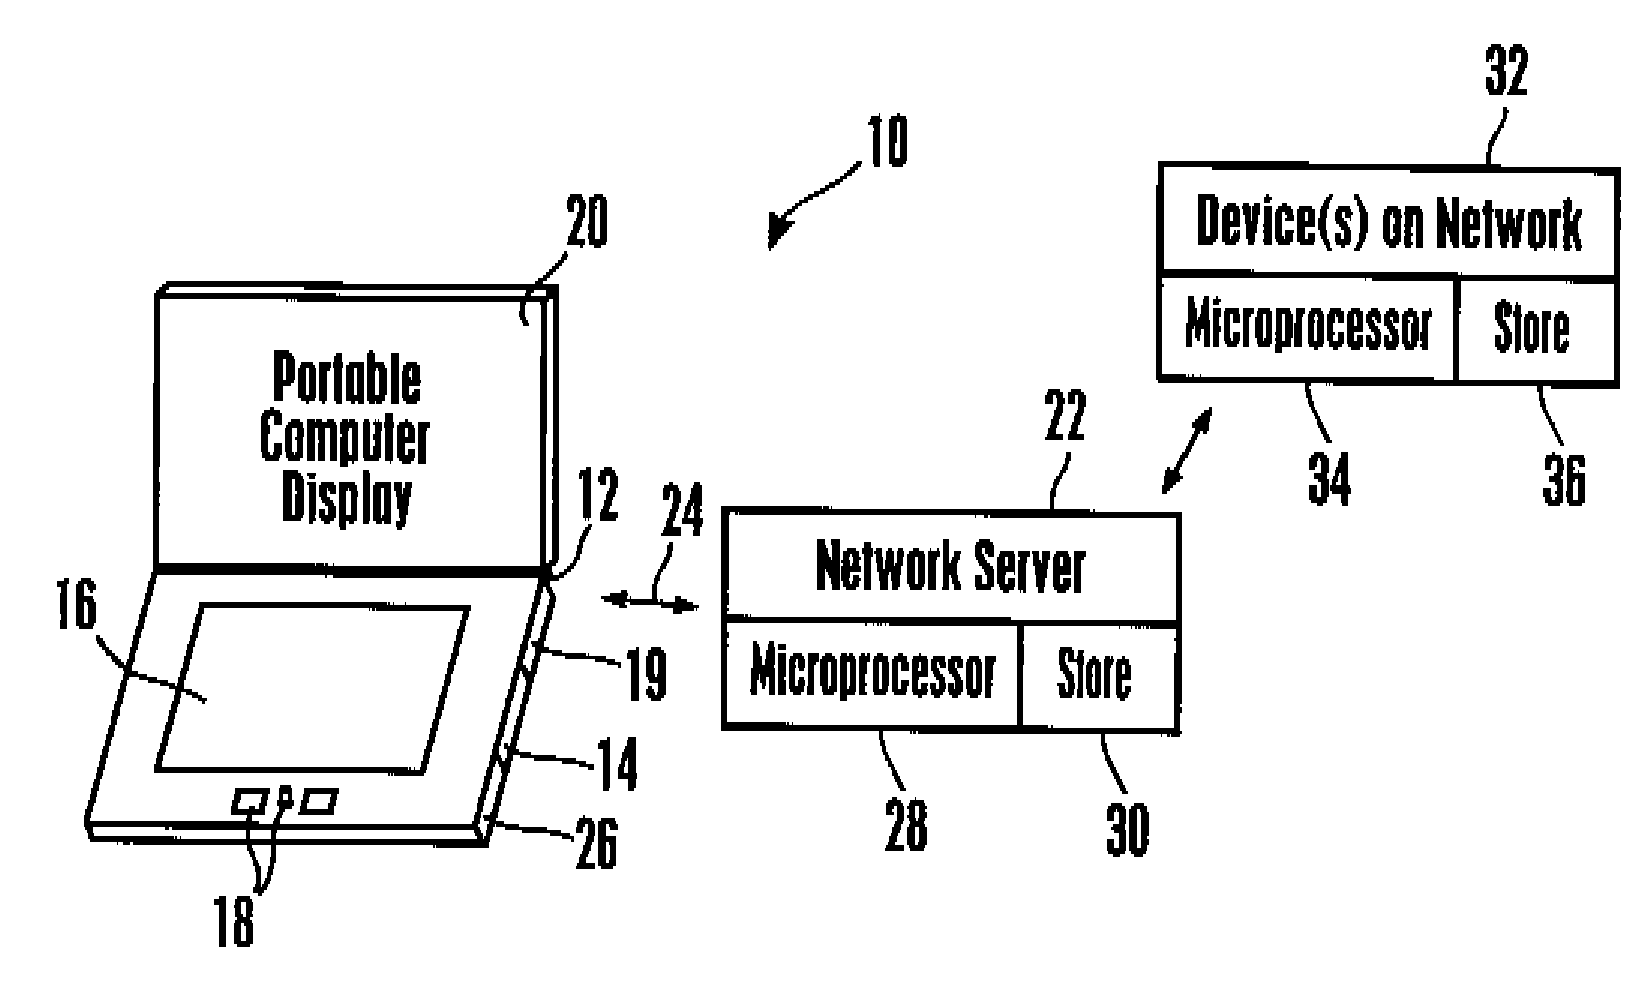 Autonomic computer configuration based on location